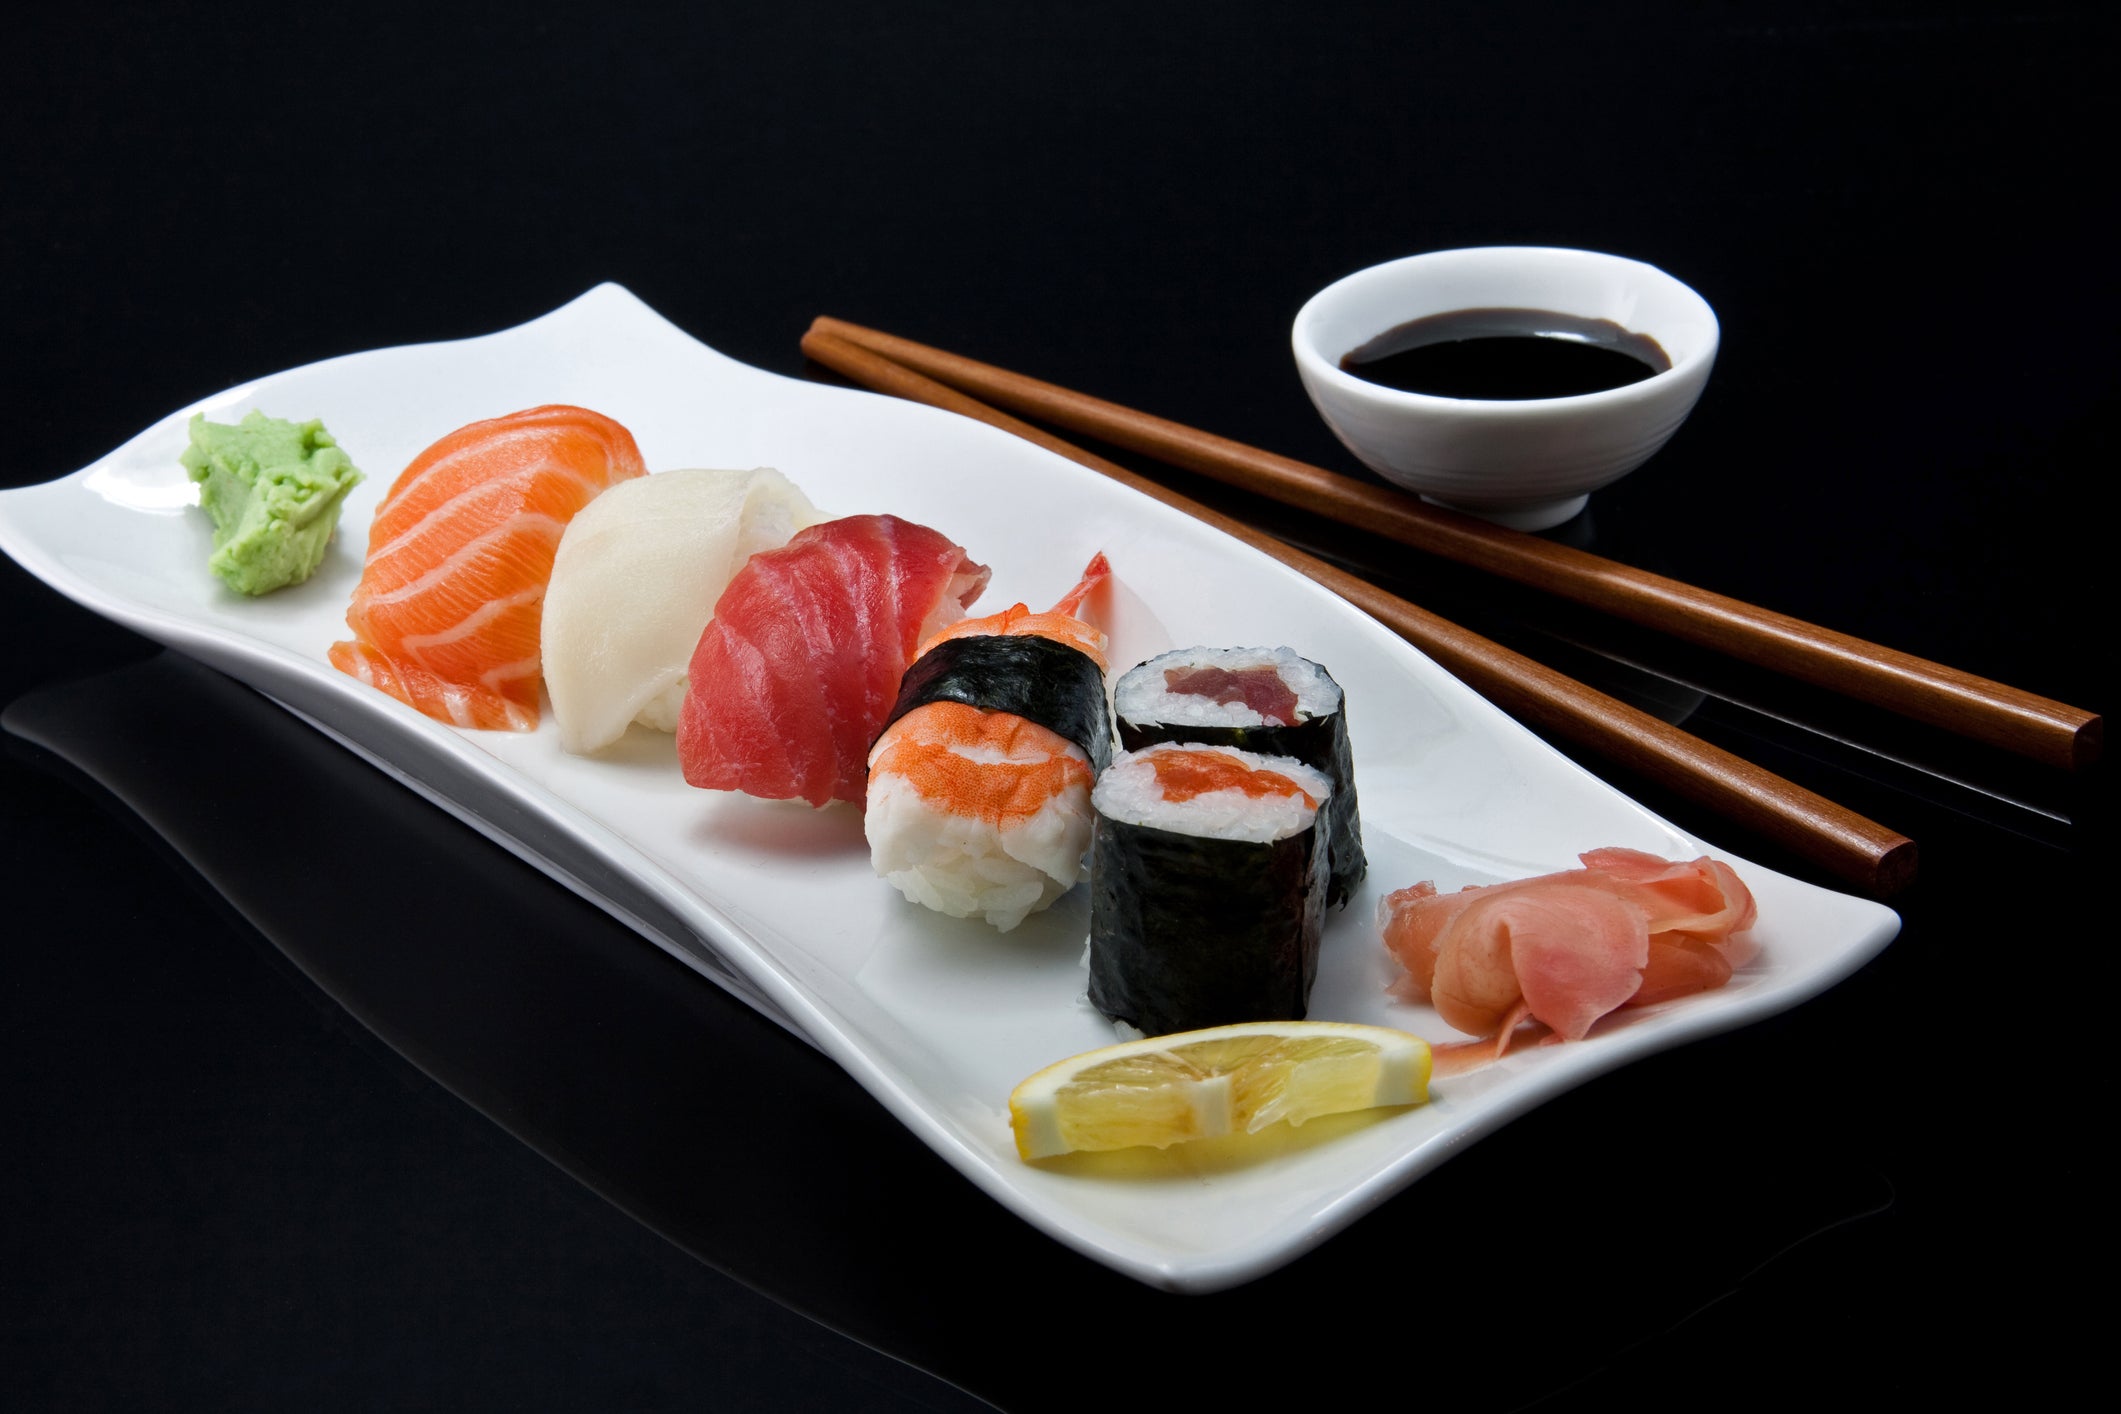 What is the purpose of nori (seaweed) in sushi rolls?